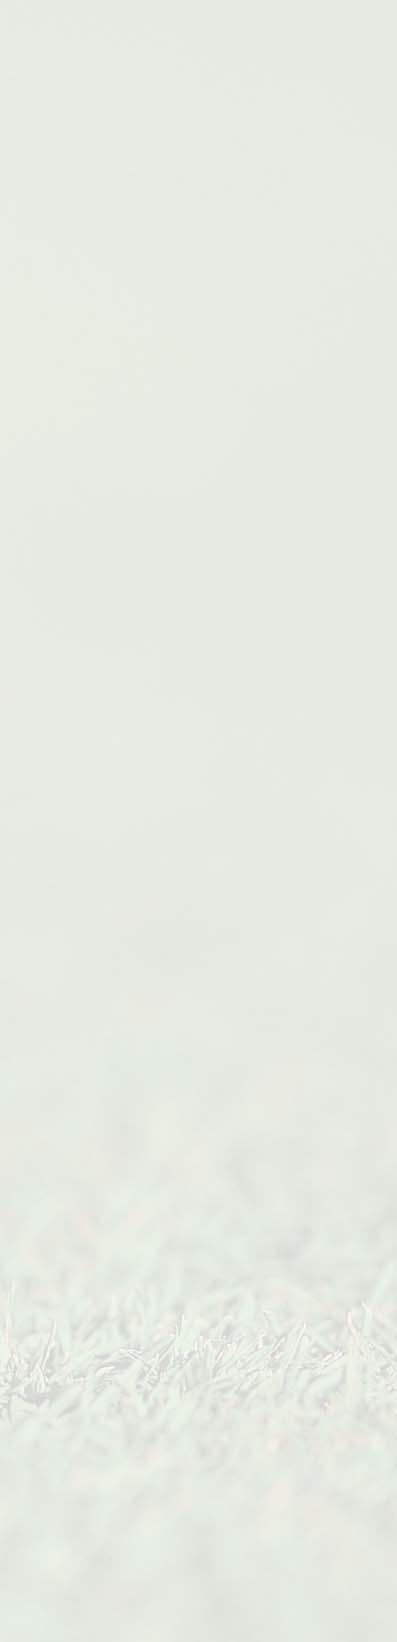 Overall Low Net / Tie Joey Chambers, Les Craft, Steve Farmer Championship Flight 1st Low Net / Joey Chamber First Flight 1st Low Net / Les Craft 2nd Flight 1st Low Net / Steve Farmer Ladies Senior